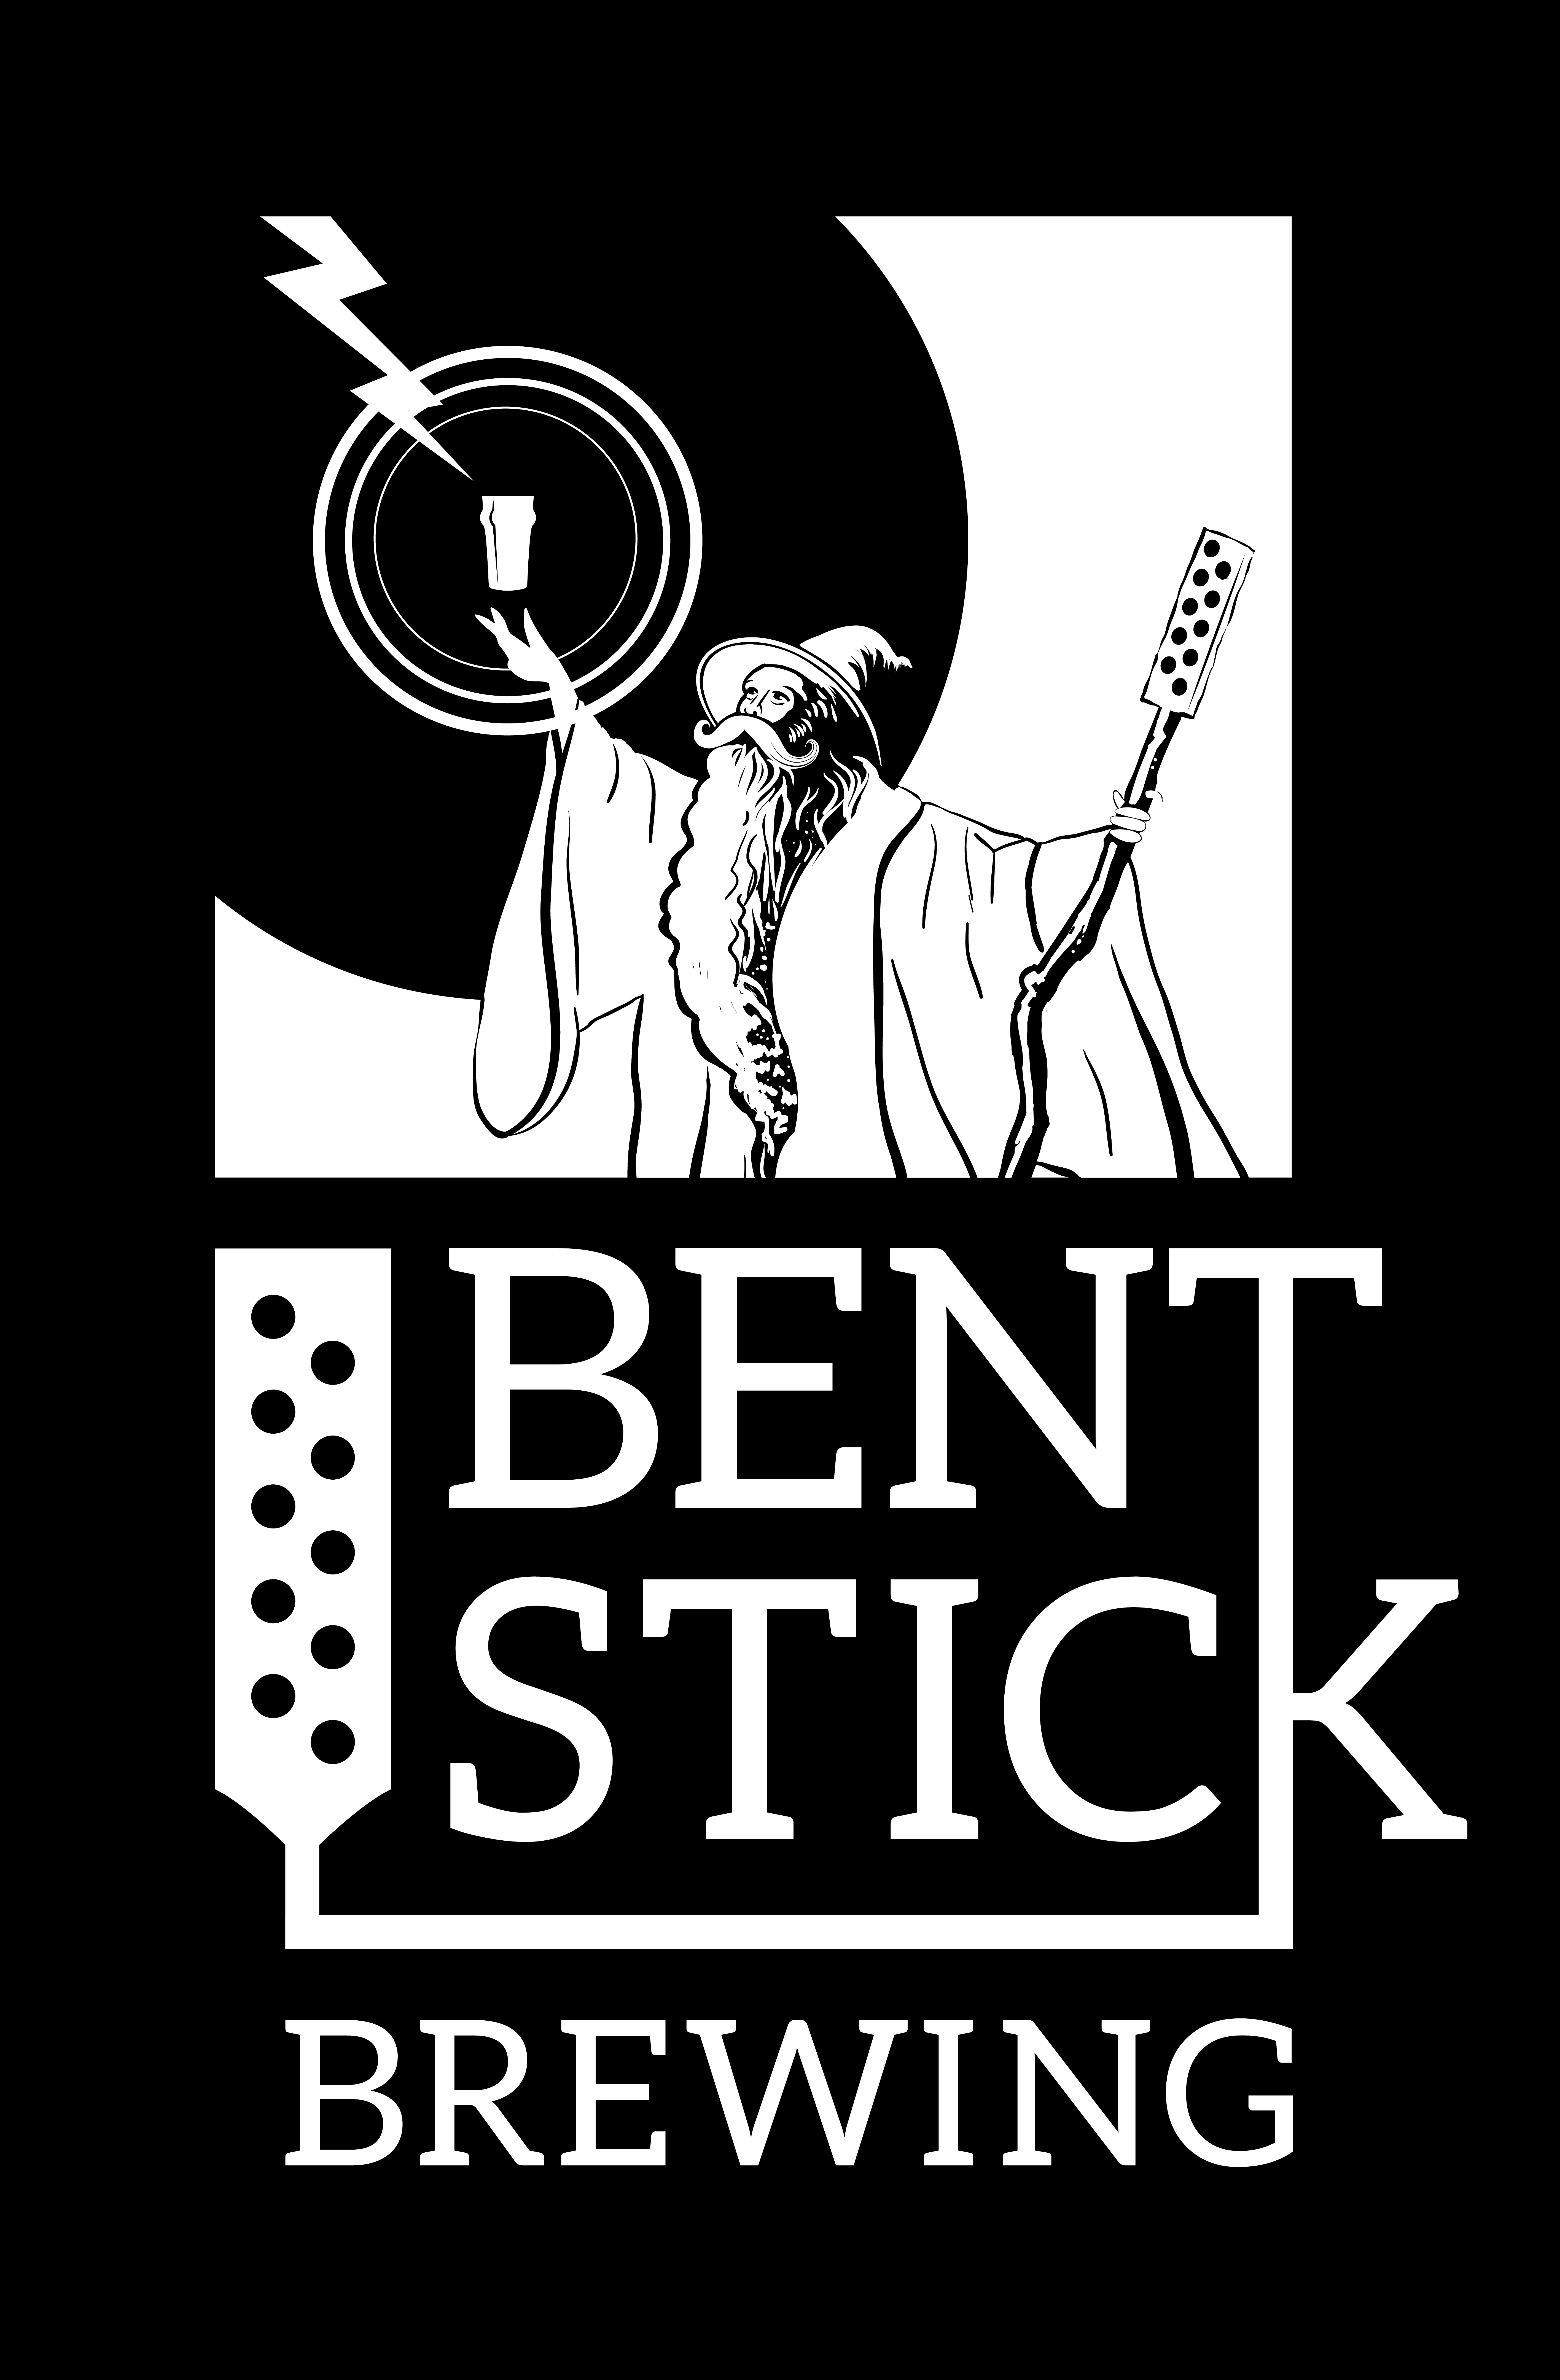 Bent Stick Brewing